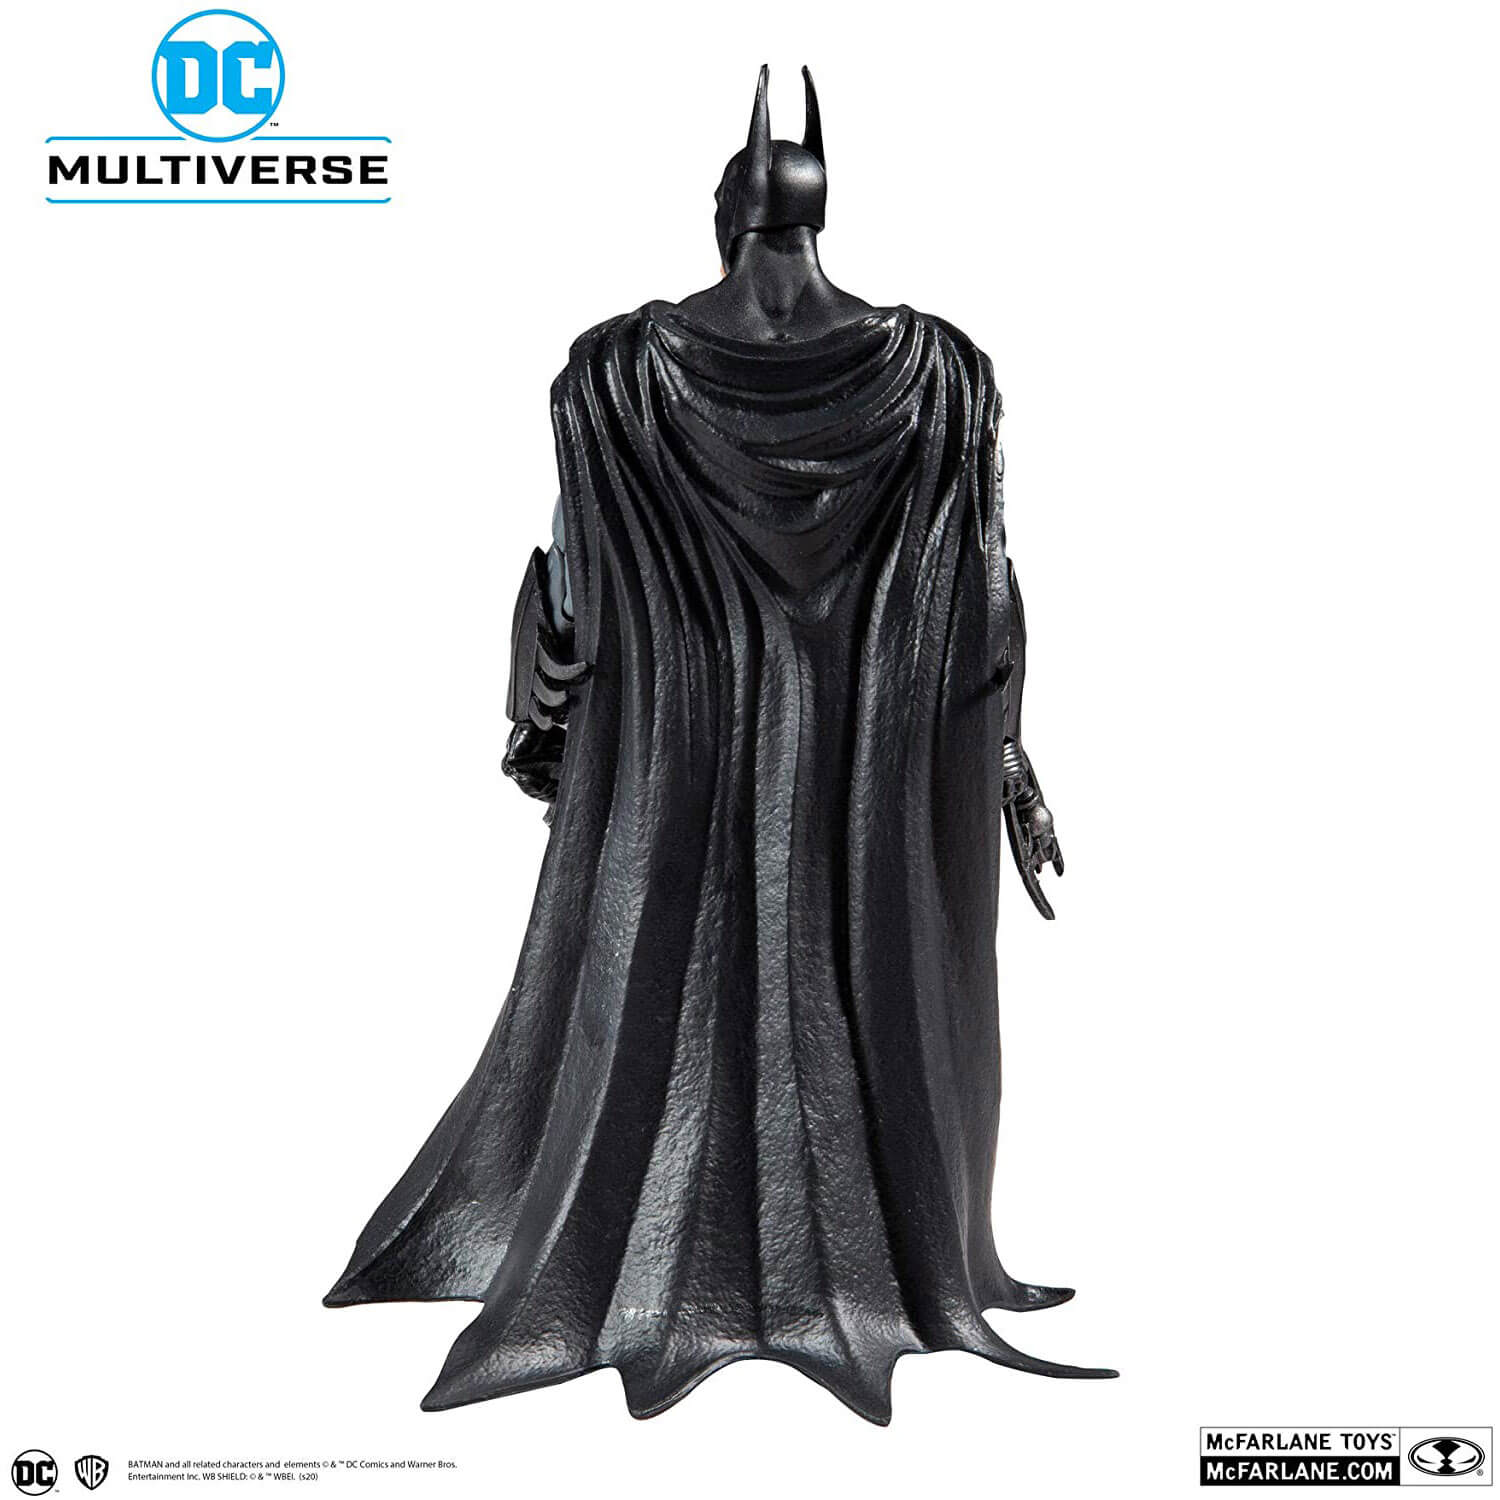 DC Multiverse Arkham Asylum Batman Action Figure